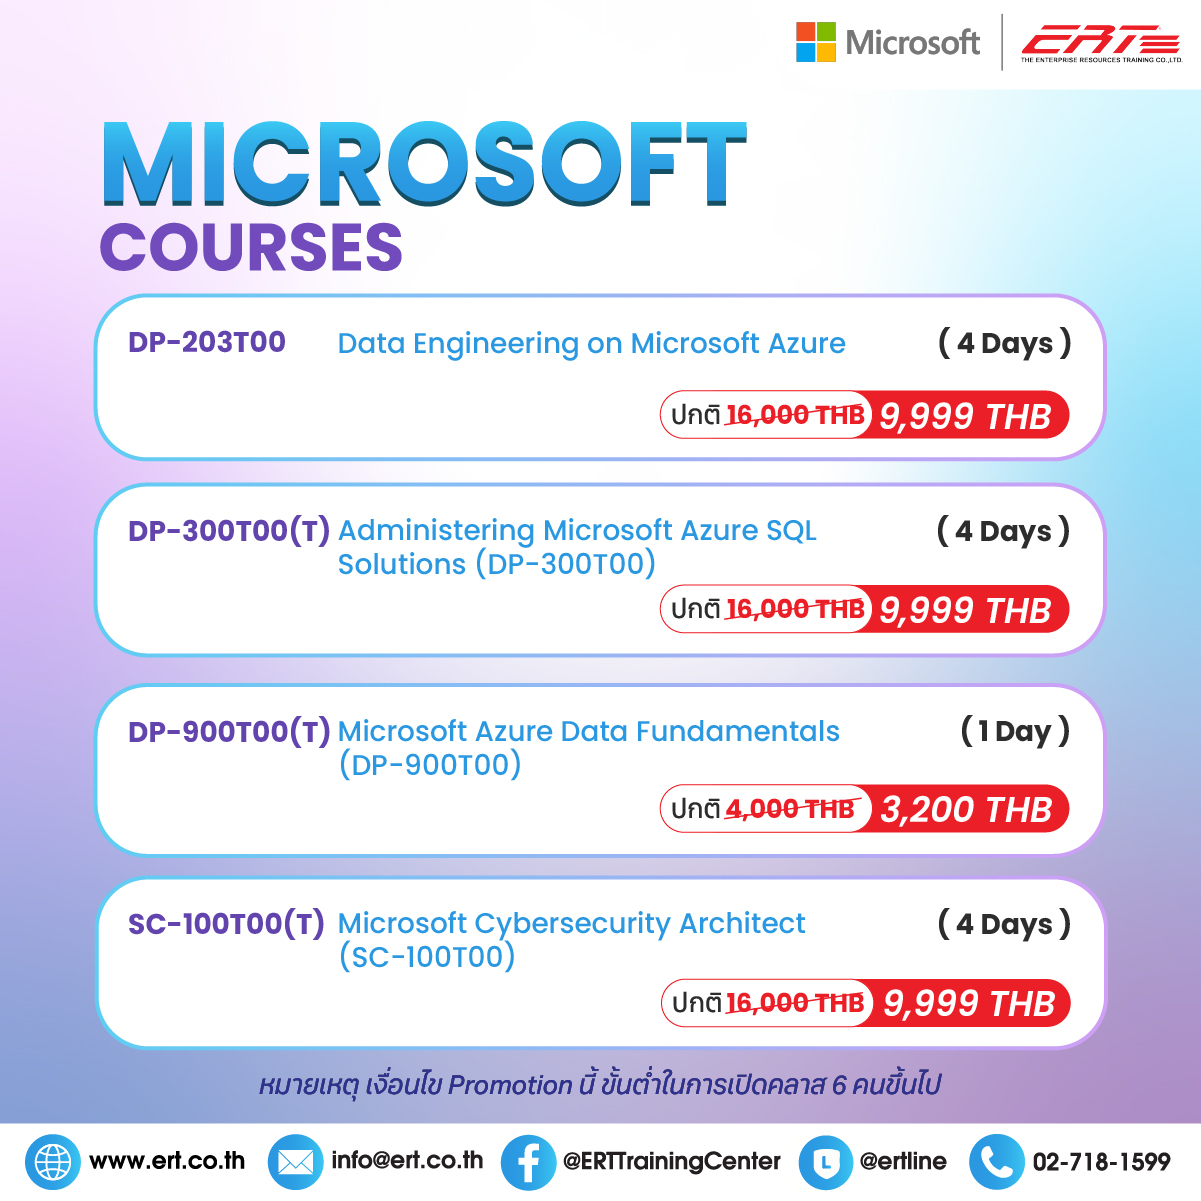 Promotion Microsoft Courses